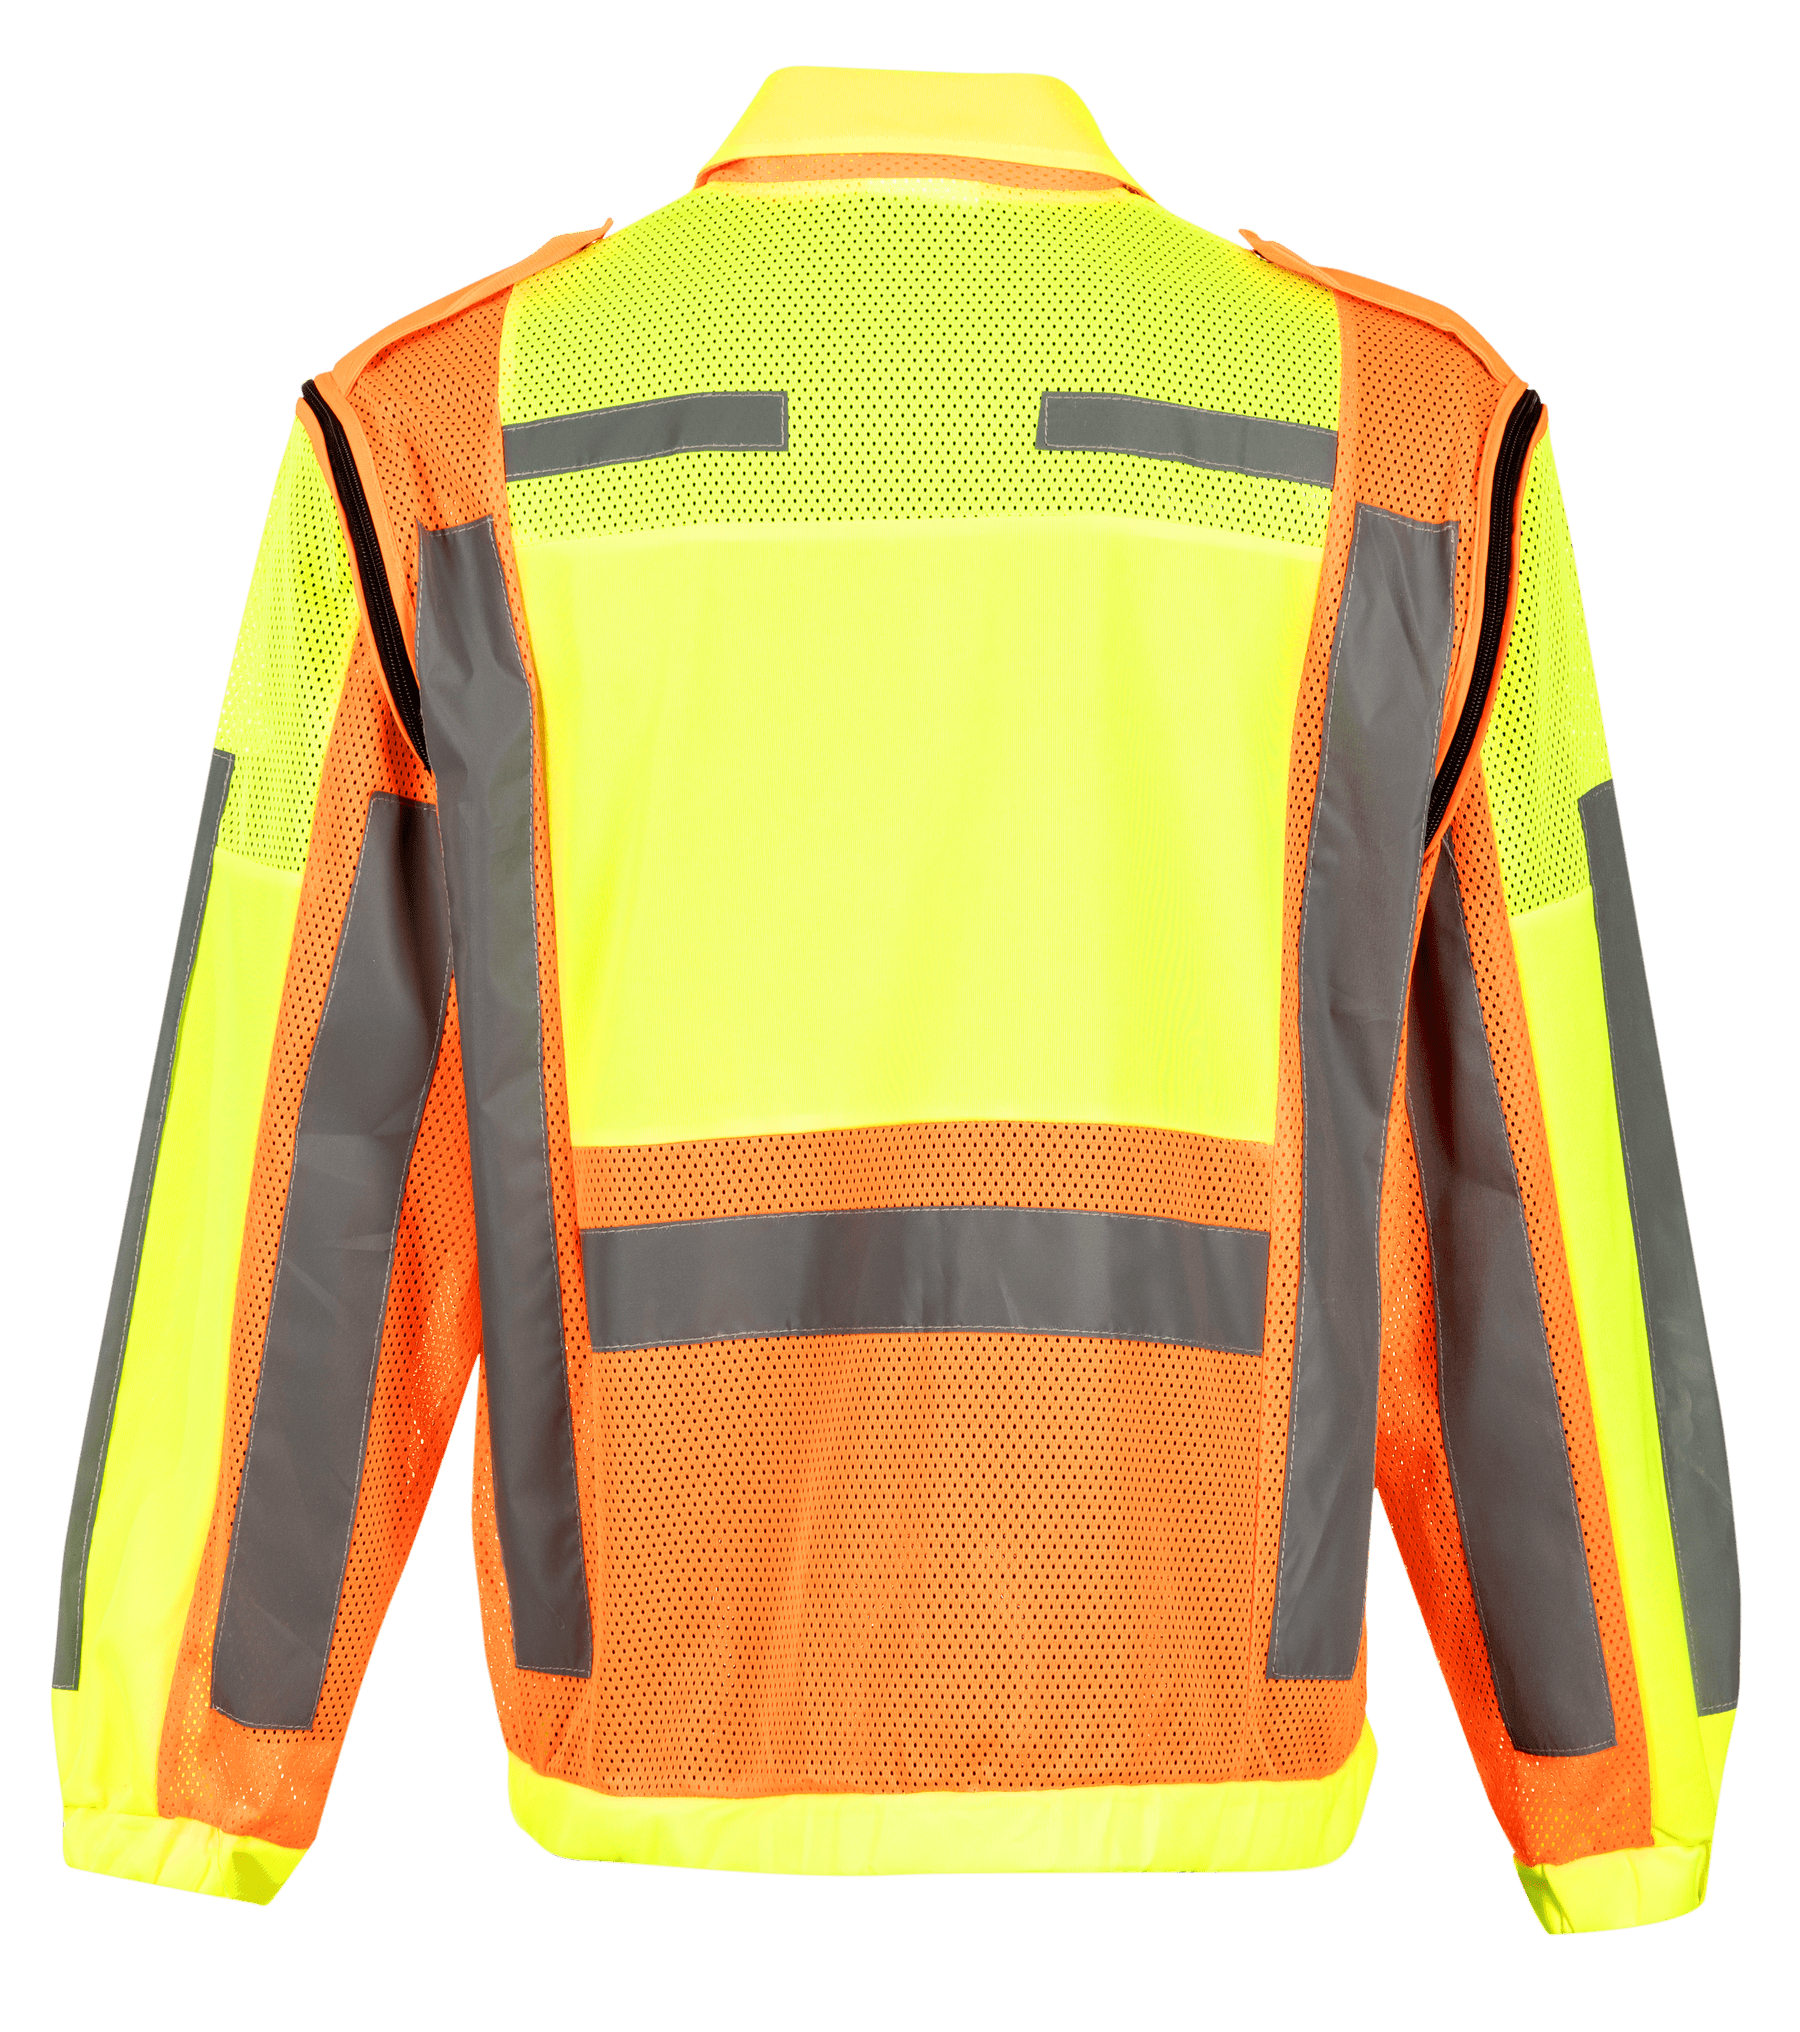 Reflective Jacket - Detachable Sleeves